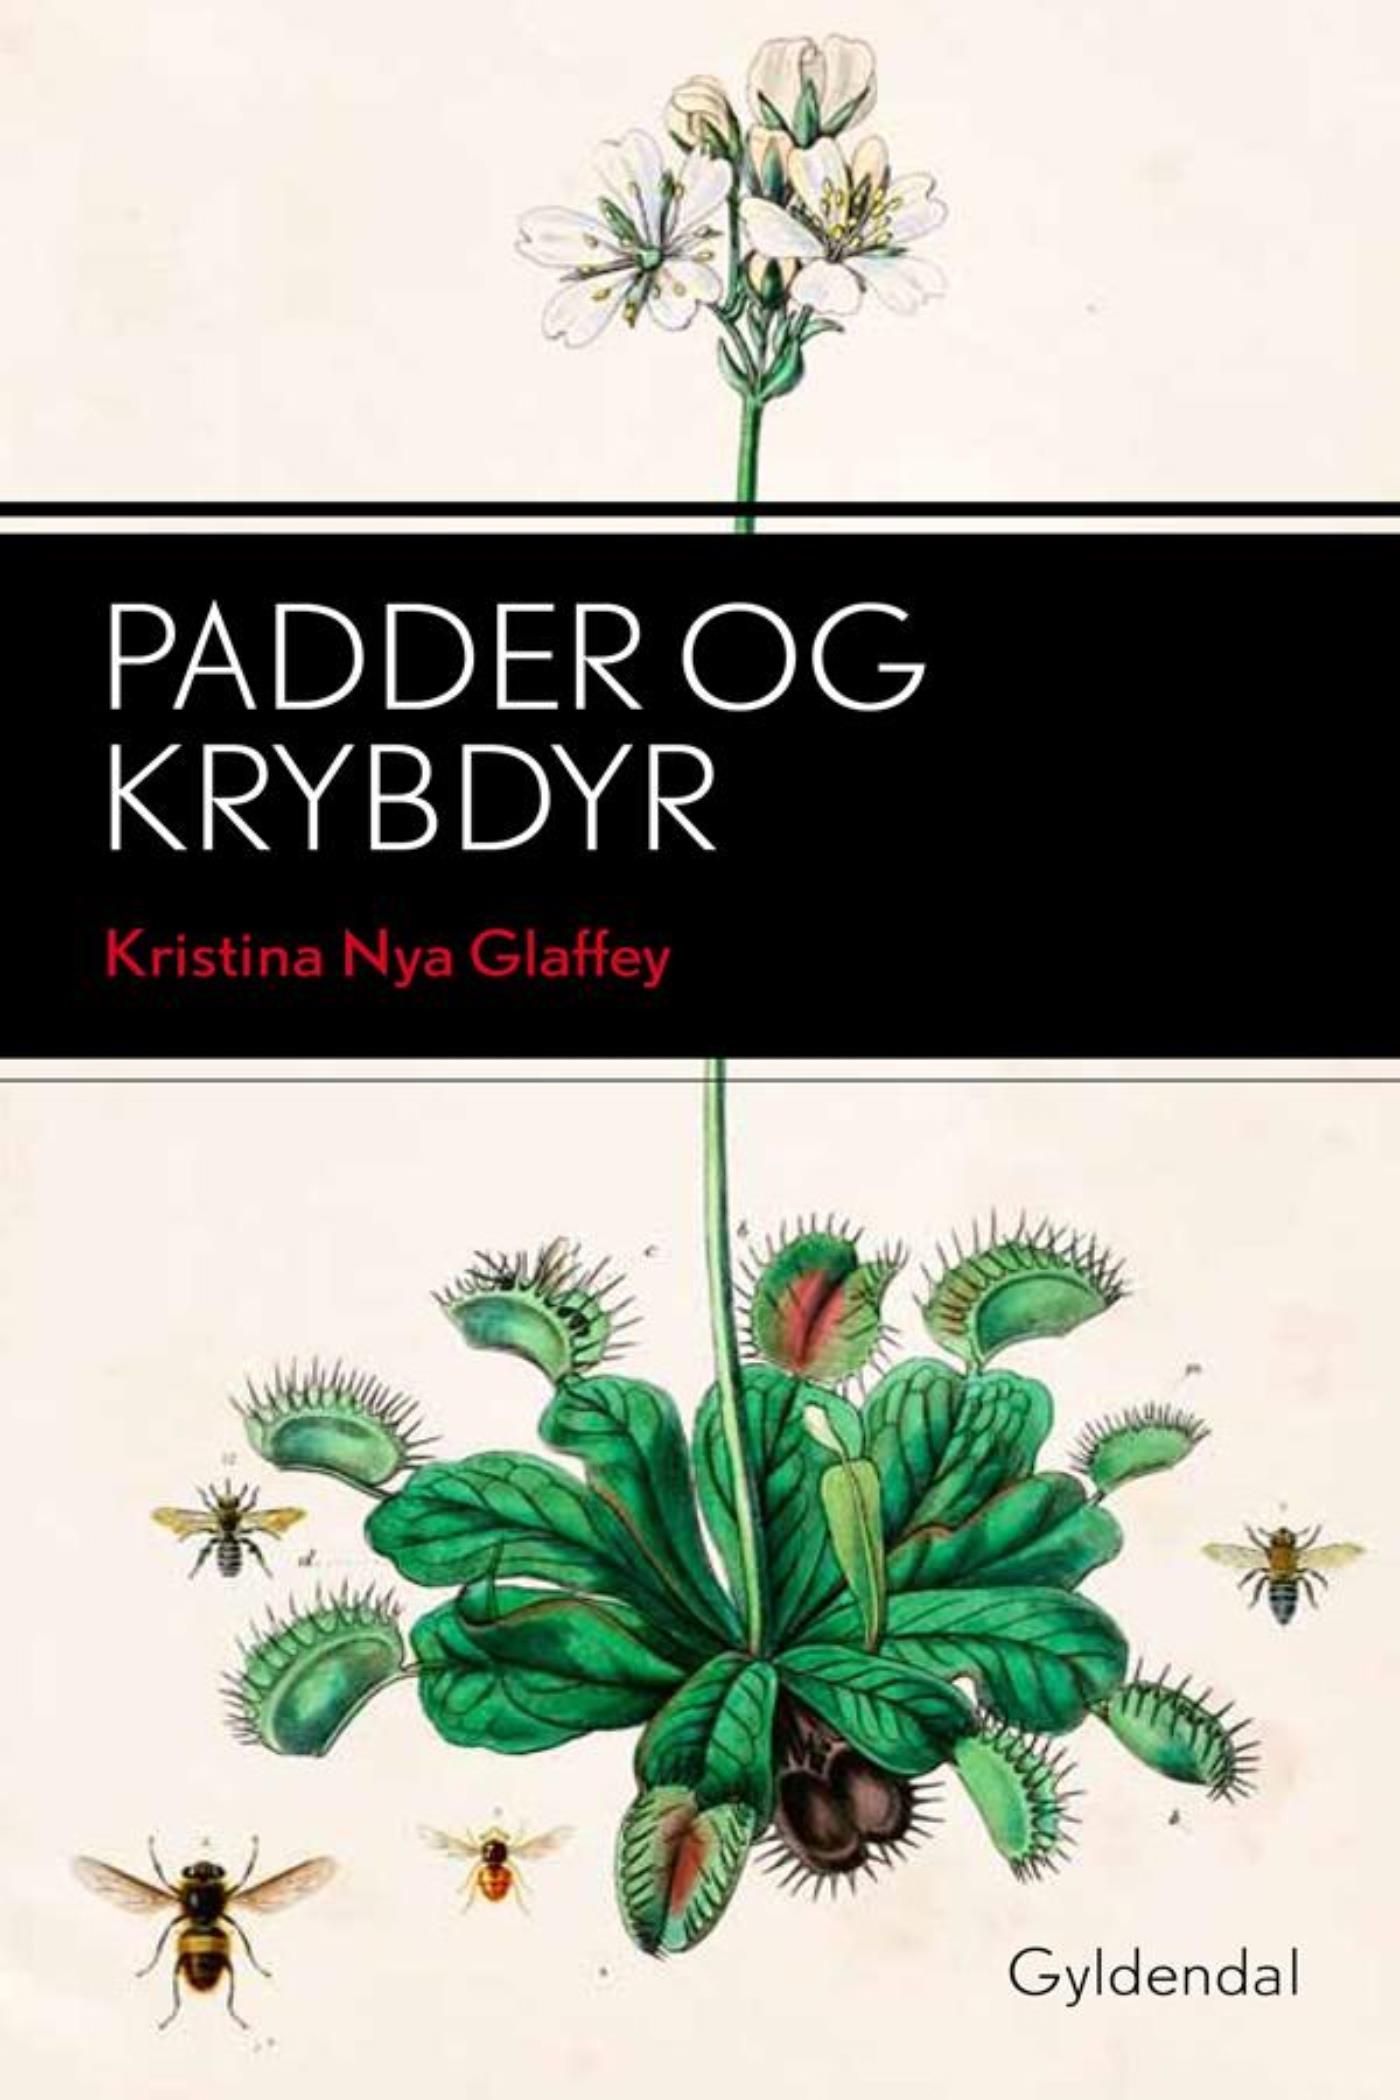 Padder og krybdyr, e-bok av Kristina Nya Glaffey